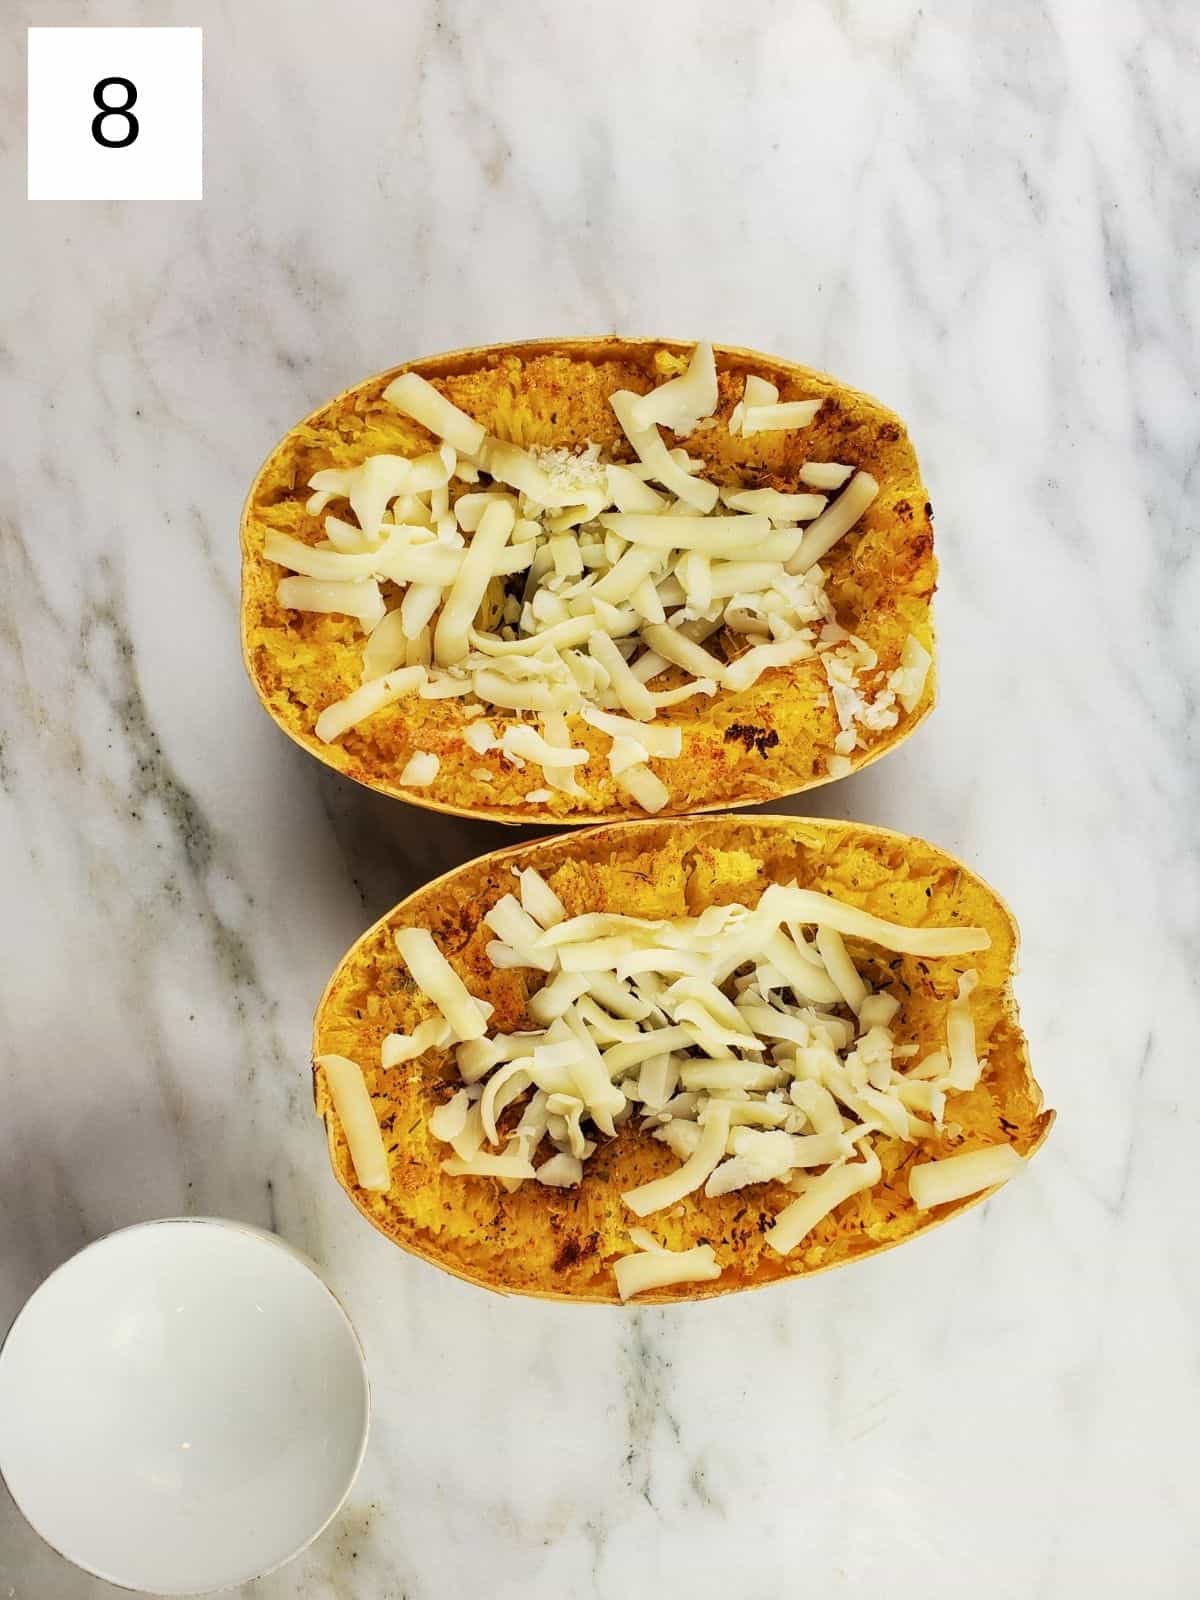 roasted seasoned spaghetti squash halves topped with mozzarella cheese.